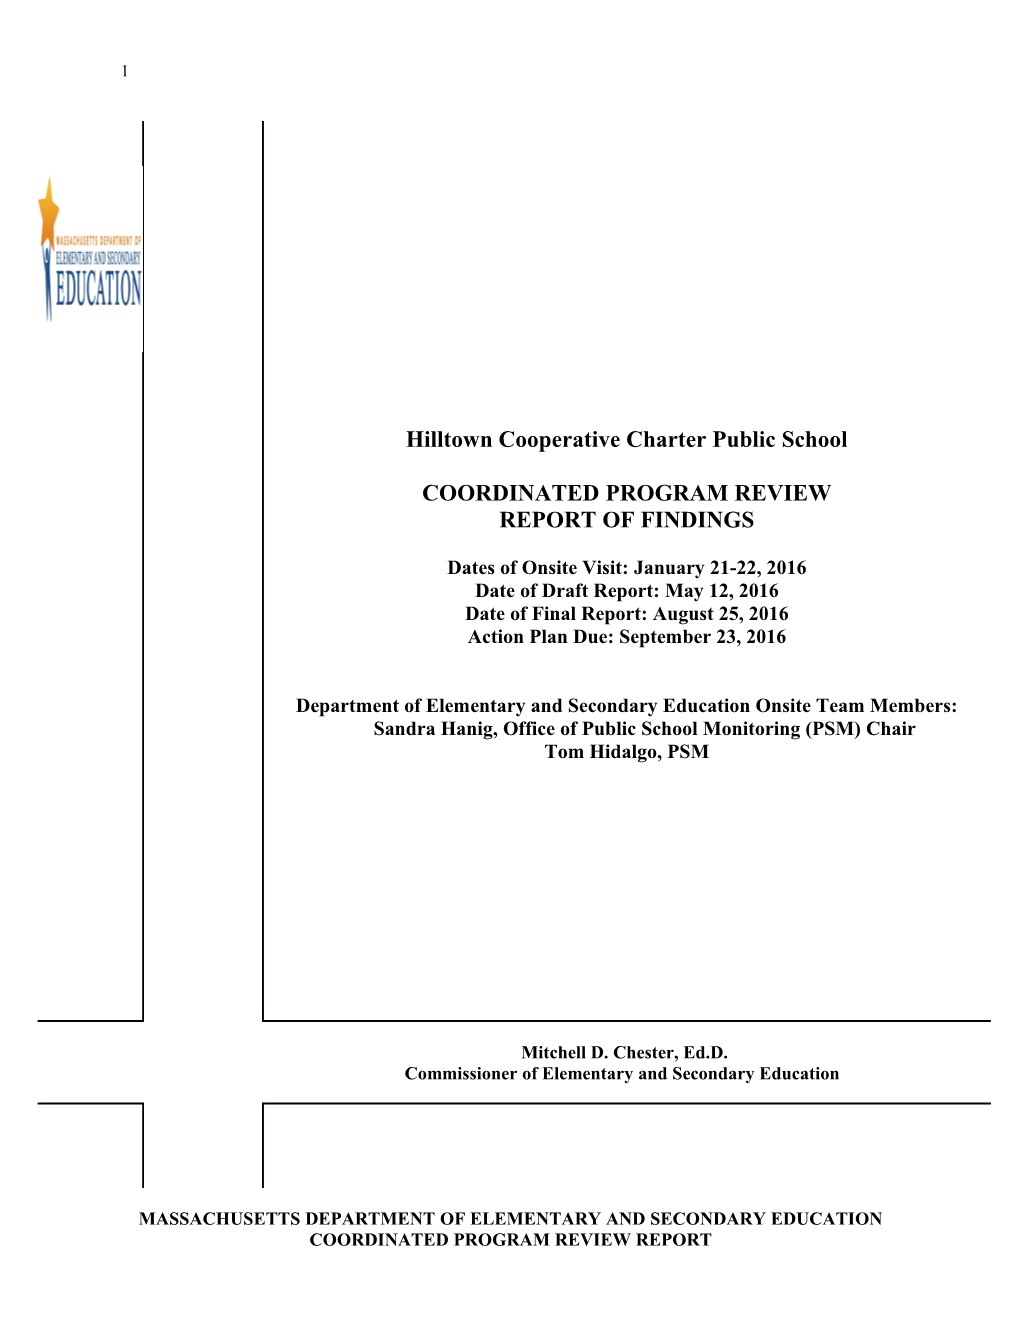 Hilltown Cooperative Charter School CPR Final Report 2016